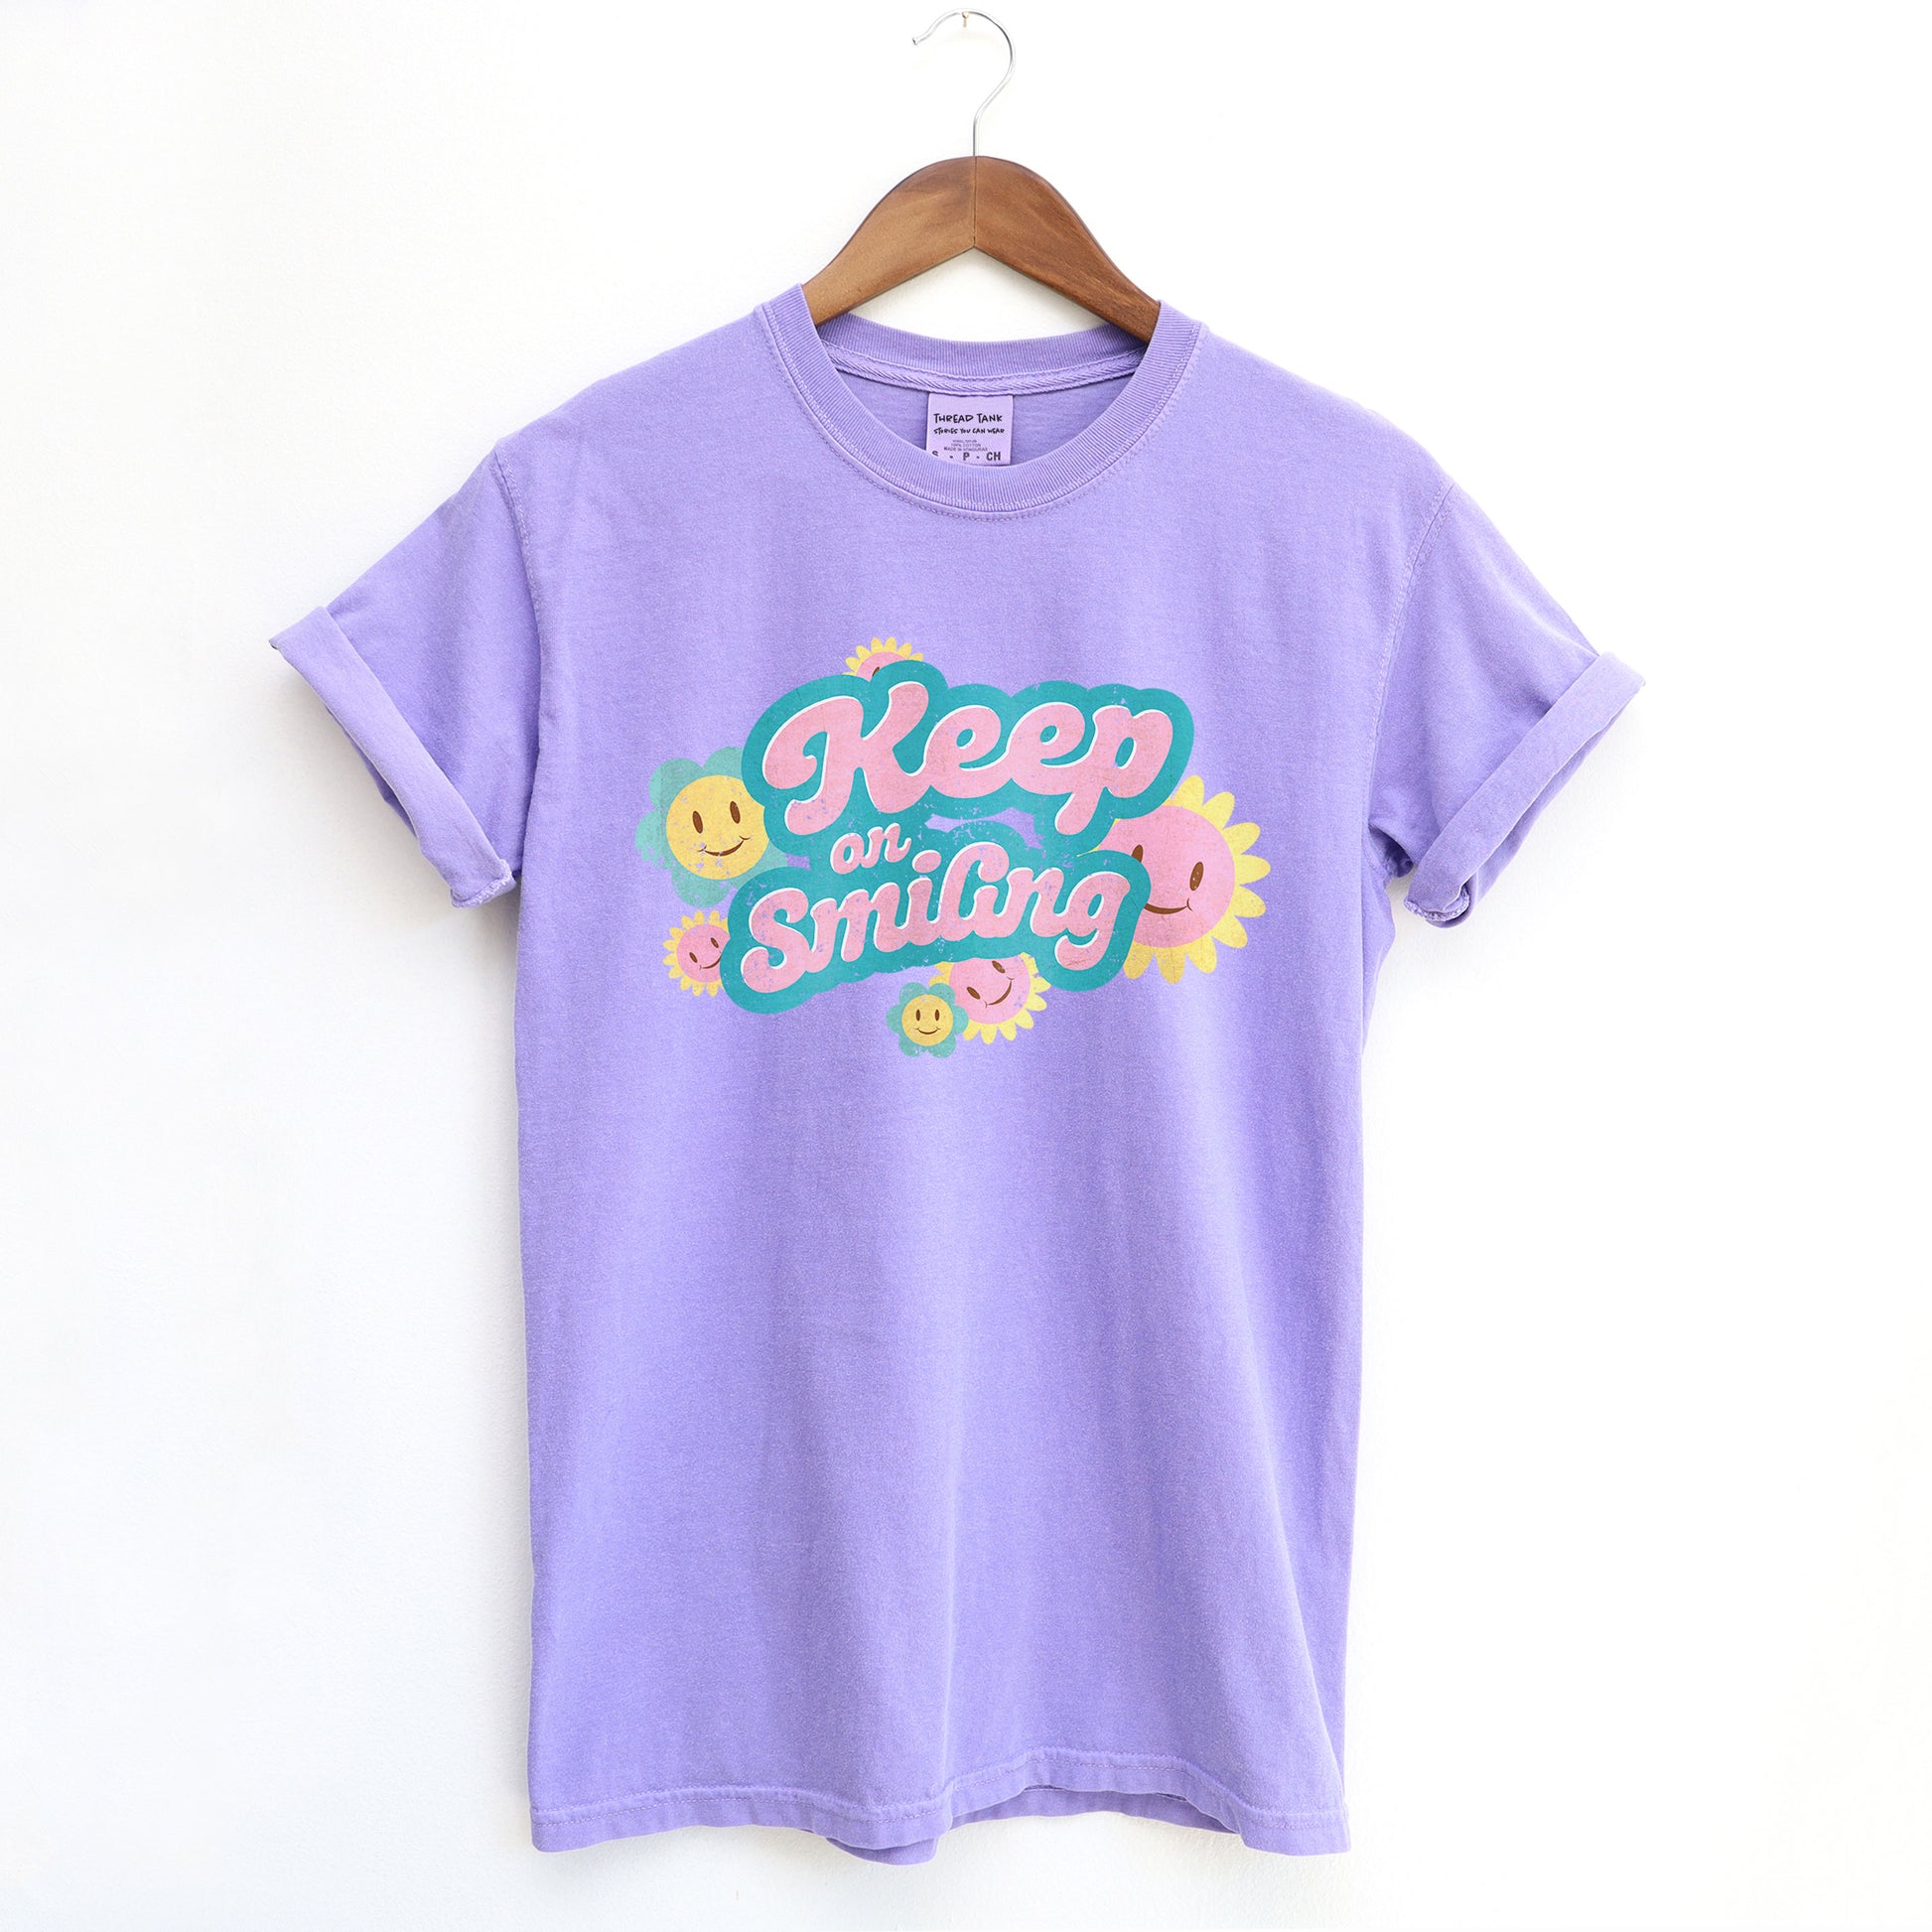 Keep On Smiling Garment-Dyed Tee Vintage Violet Image